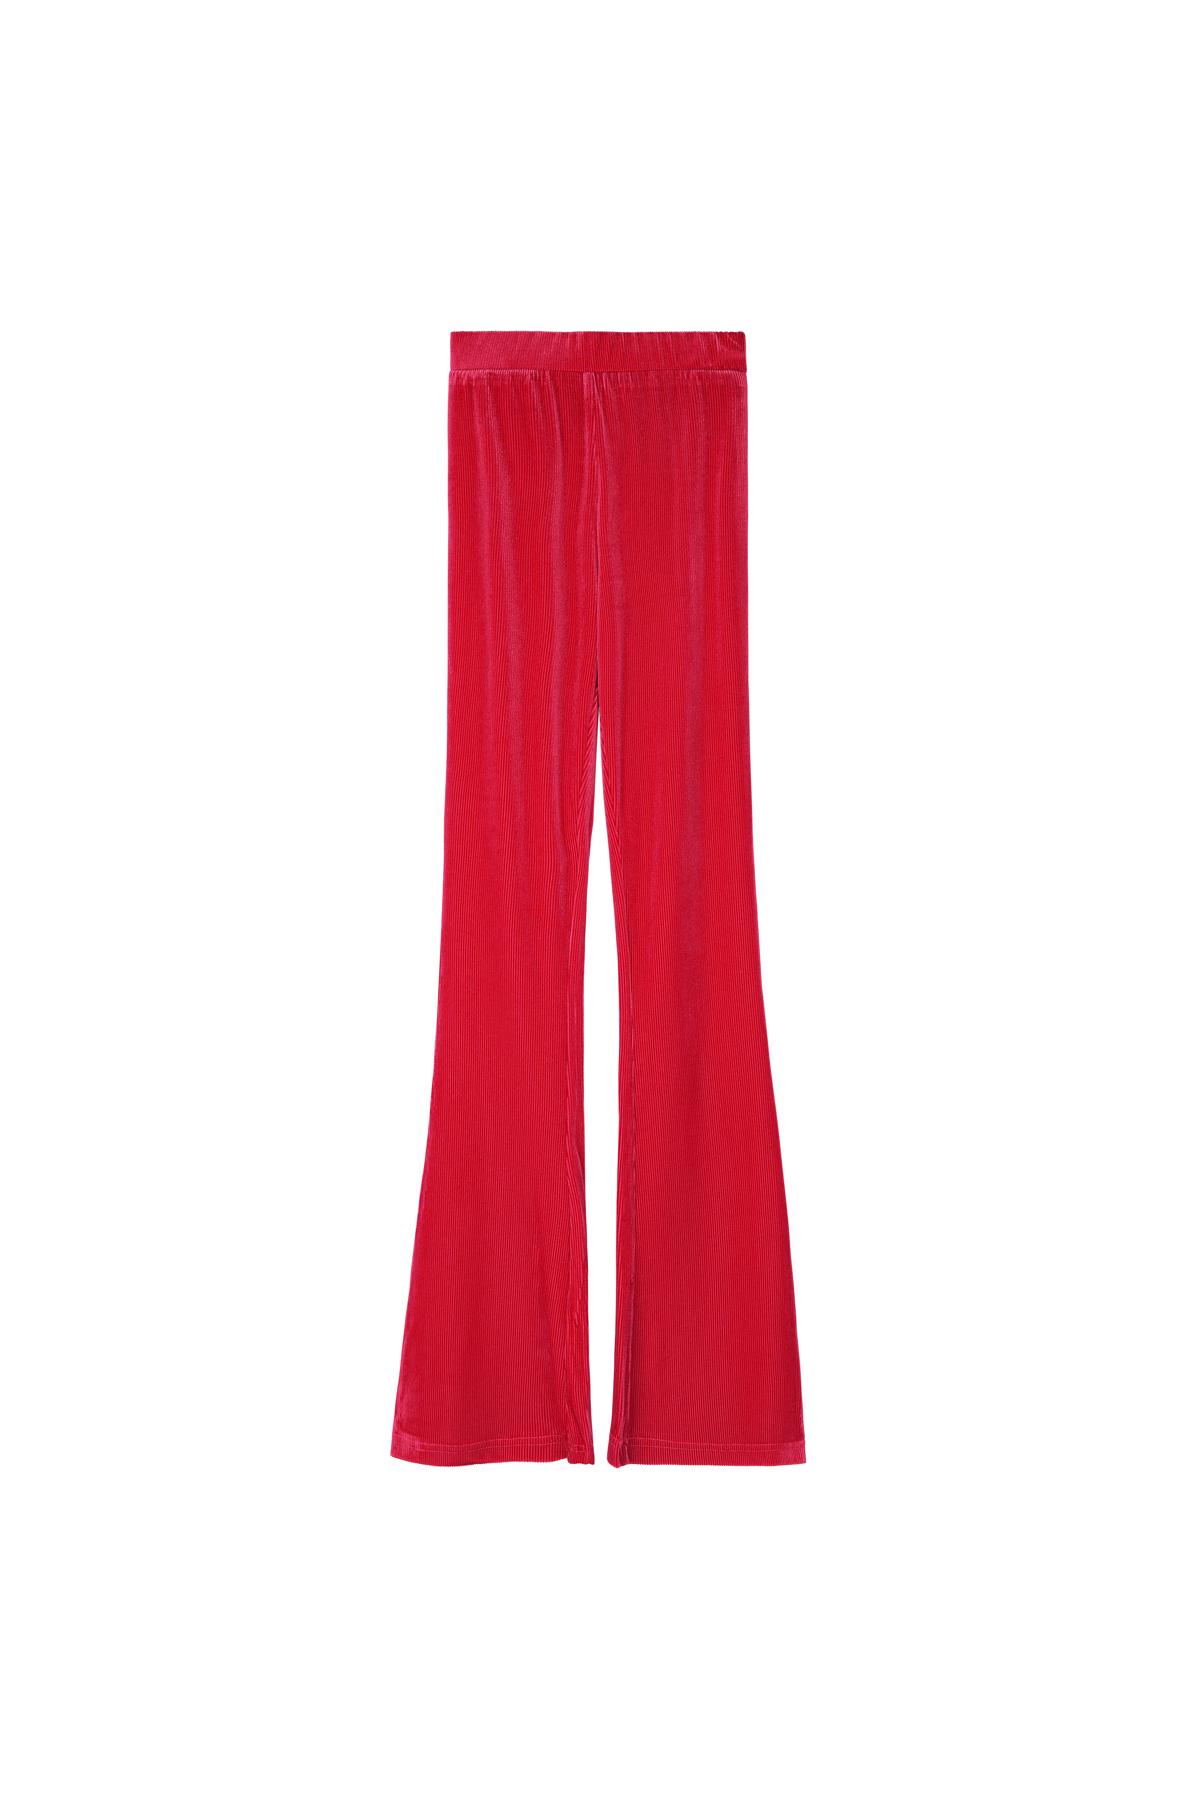 Pantalon Century Rouge S h5 